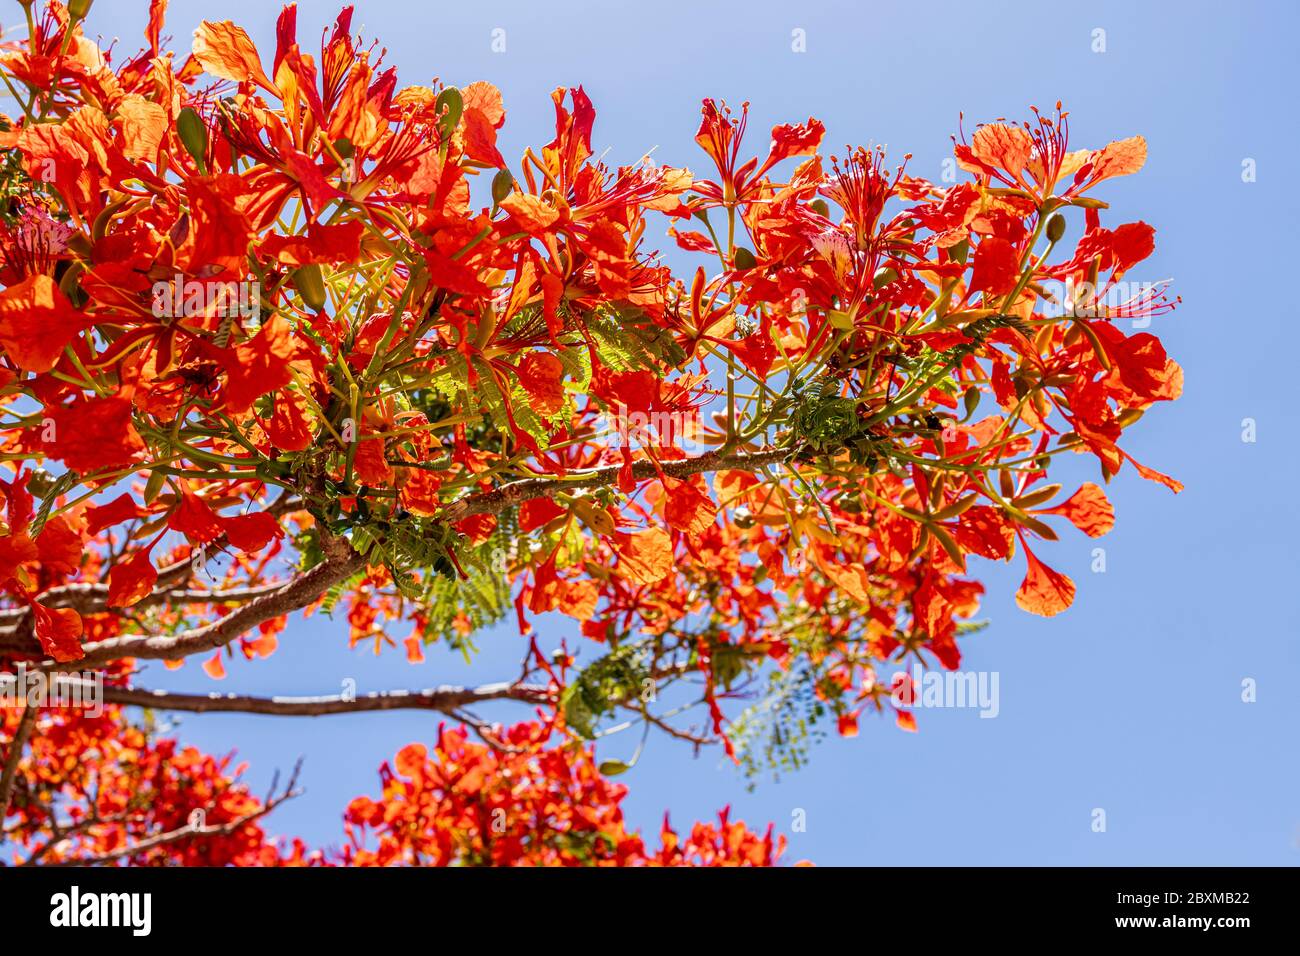 Delonix regia, Flamboyant, Flame tree, with it's distinctive red flowers in late spring, Playa San Juan, Tenerife, Canary Islands, Spain Stock Photo